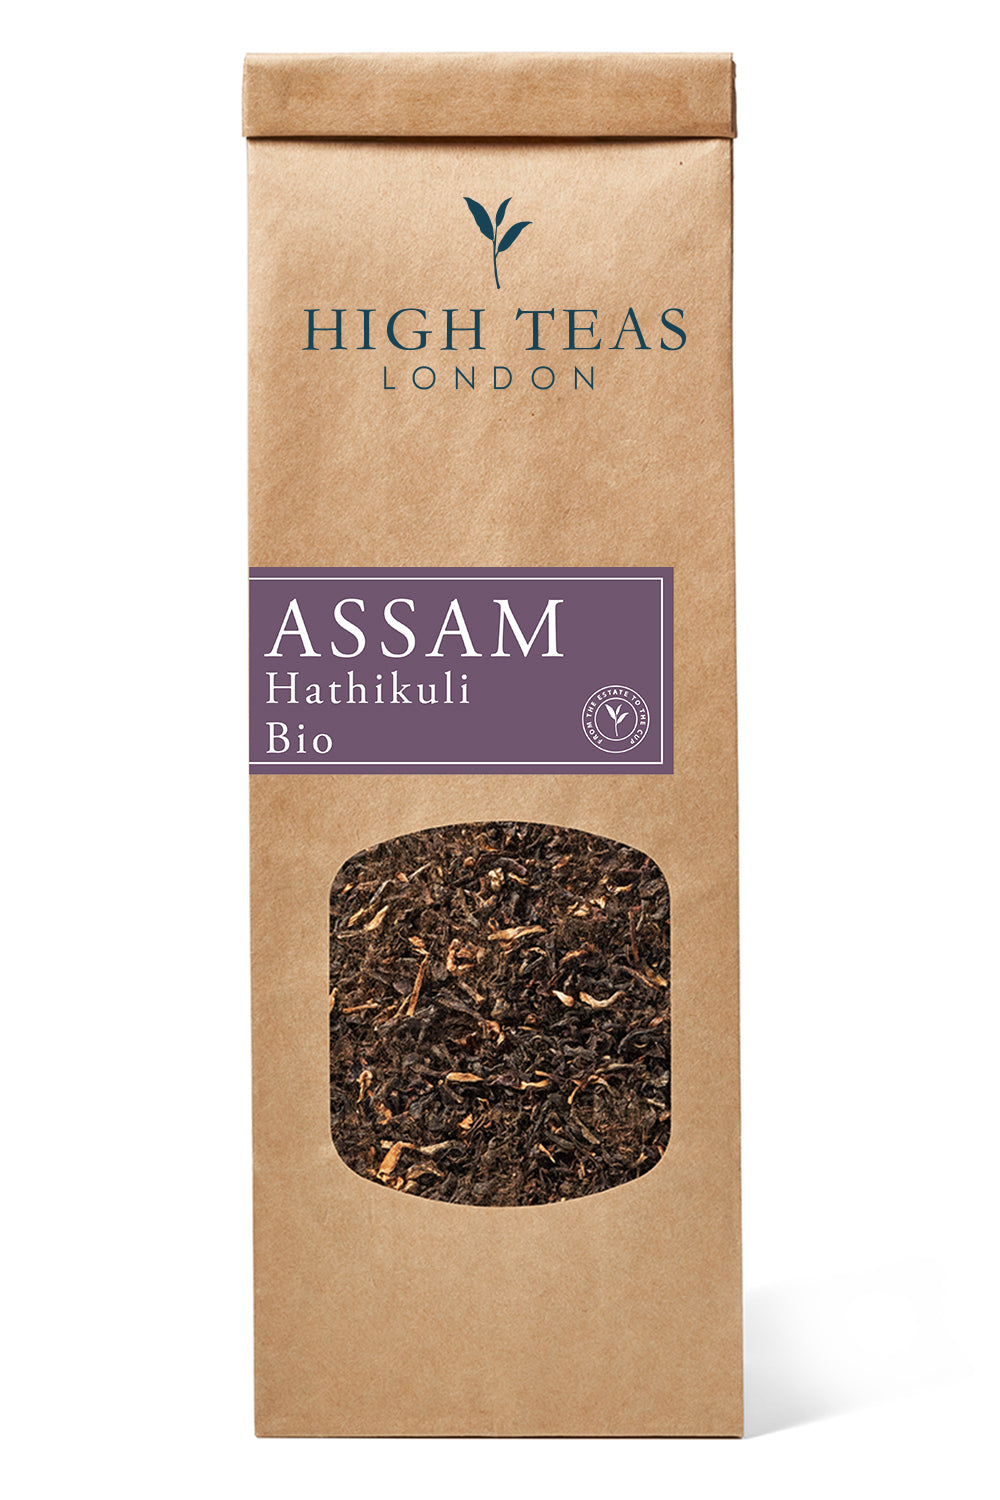 Assam Hathikuli Bio-50g-Loose Leaf Tea-High Teas